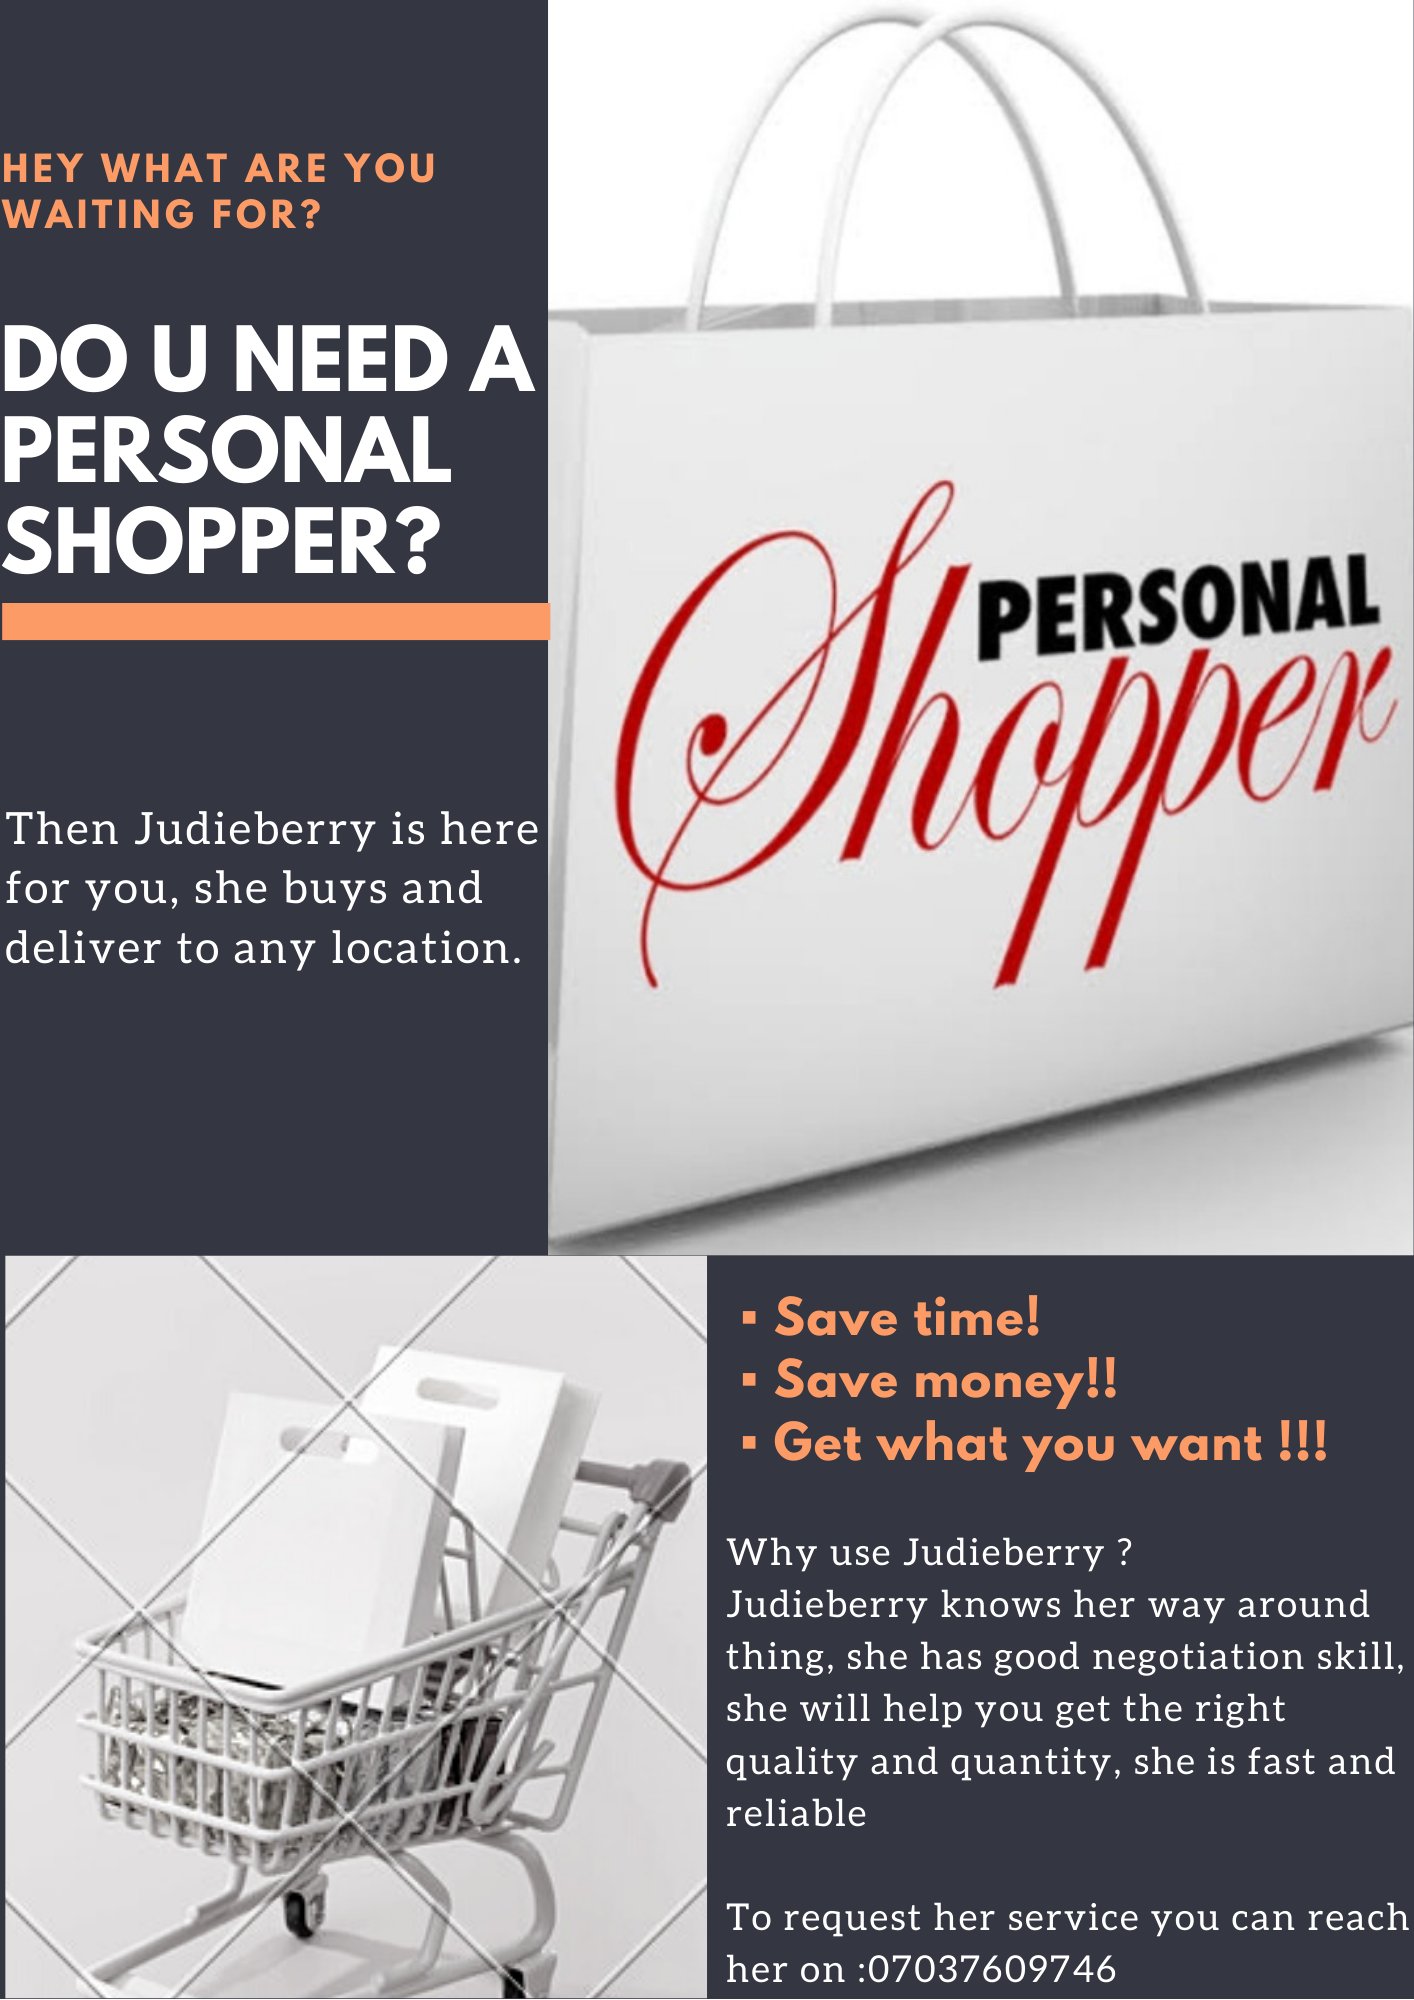 She Who Shops - Personal Shopper